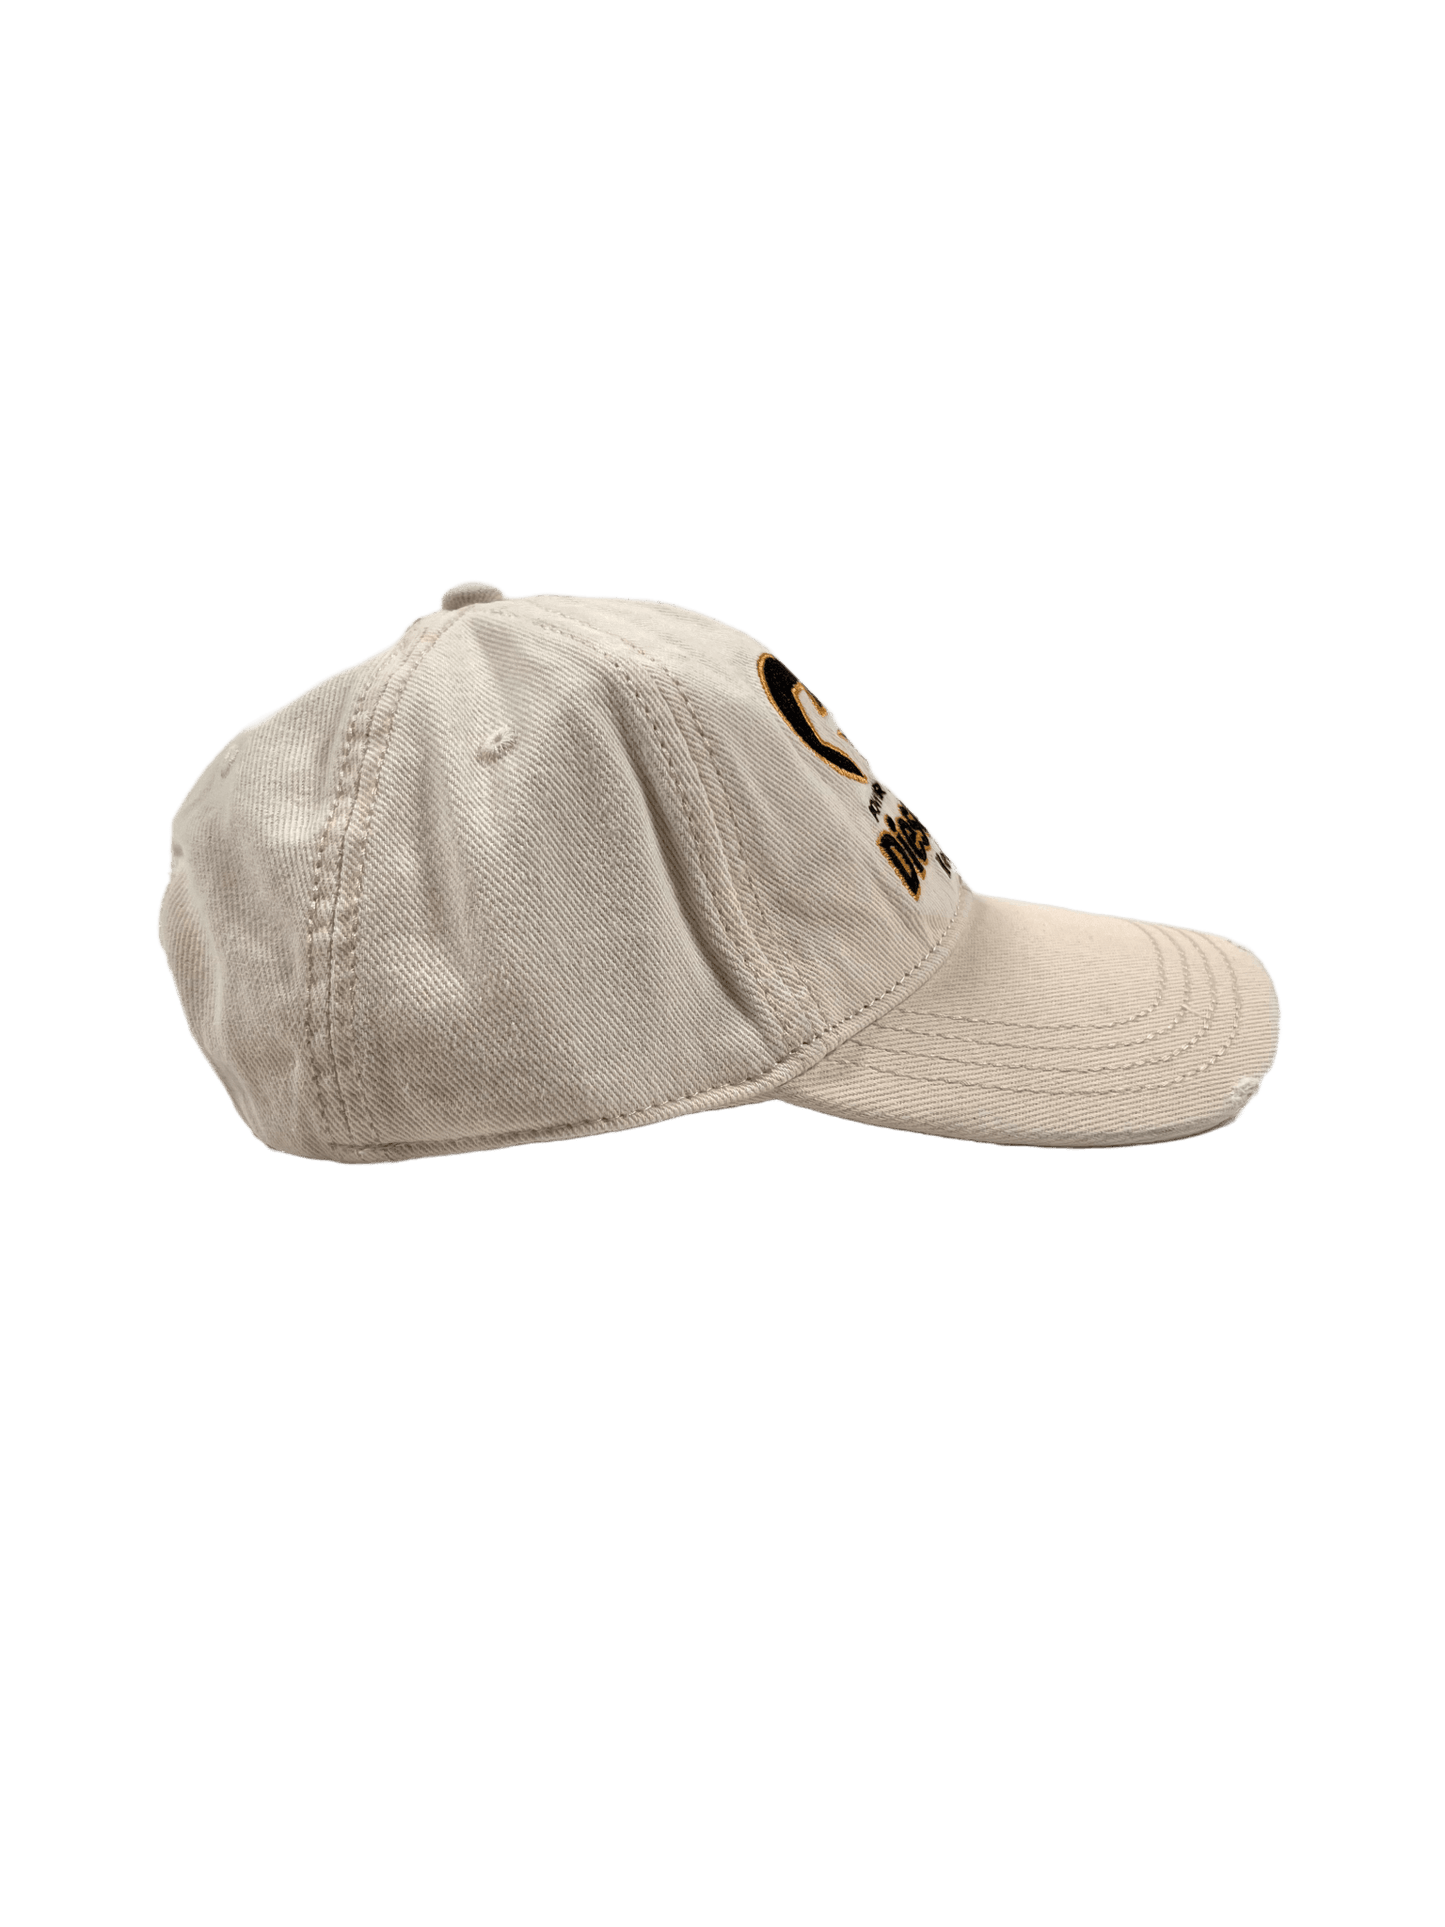 A beige Diesel C-Syom hat with a logo on it.